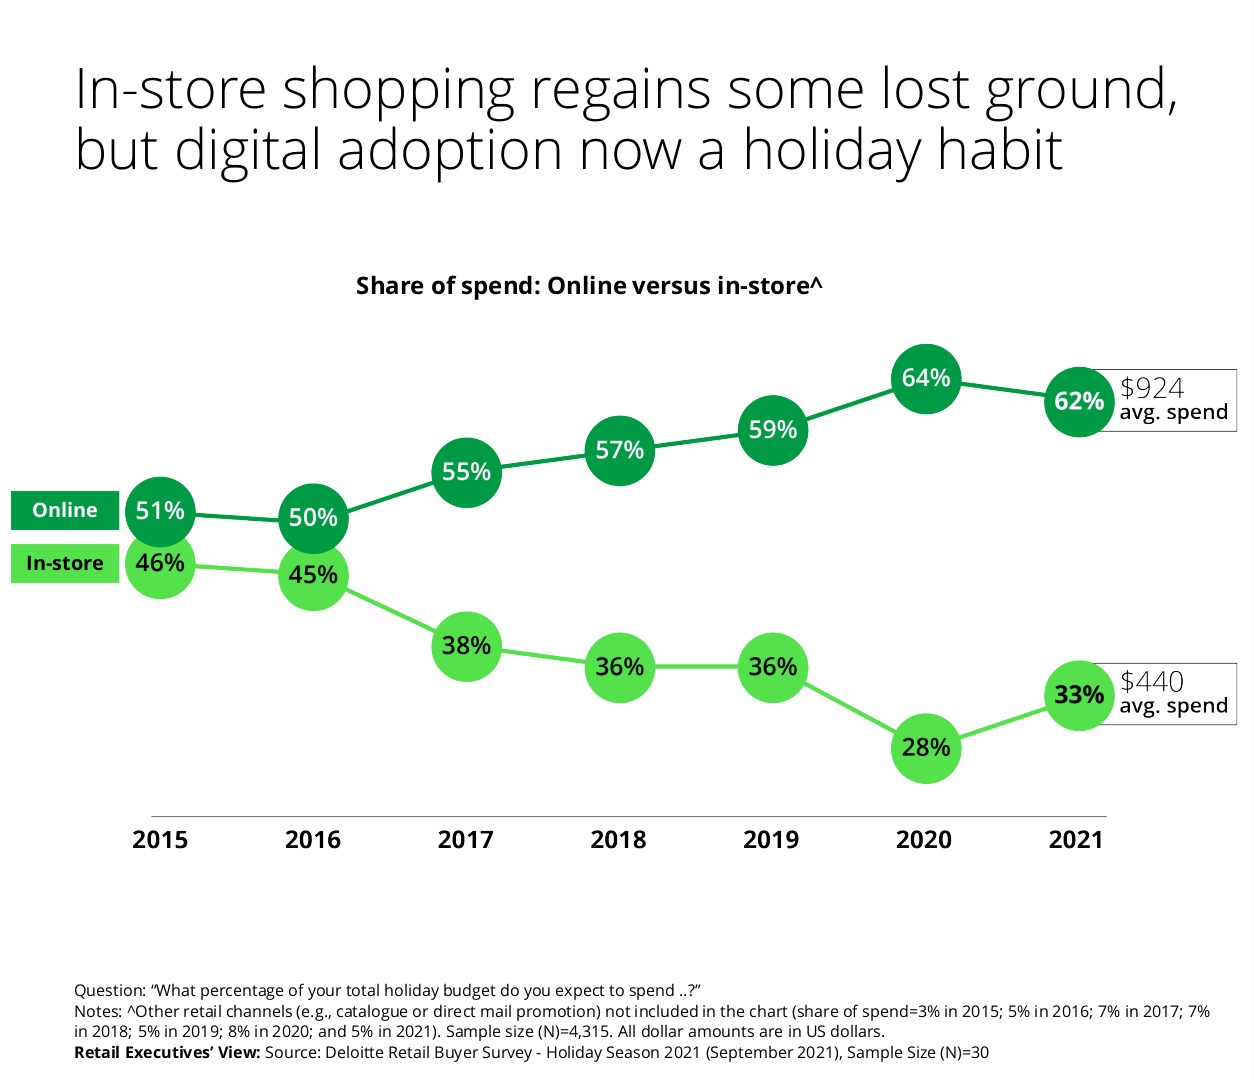 Share of spend: Online versus in-store